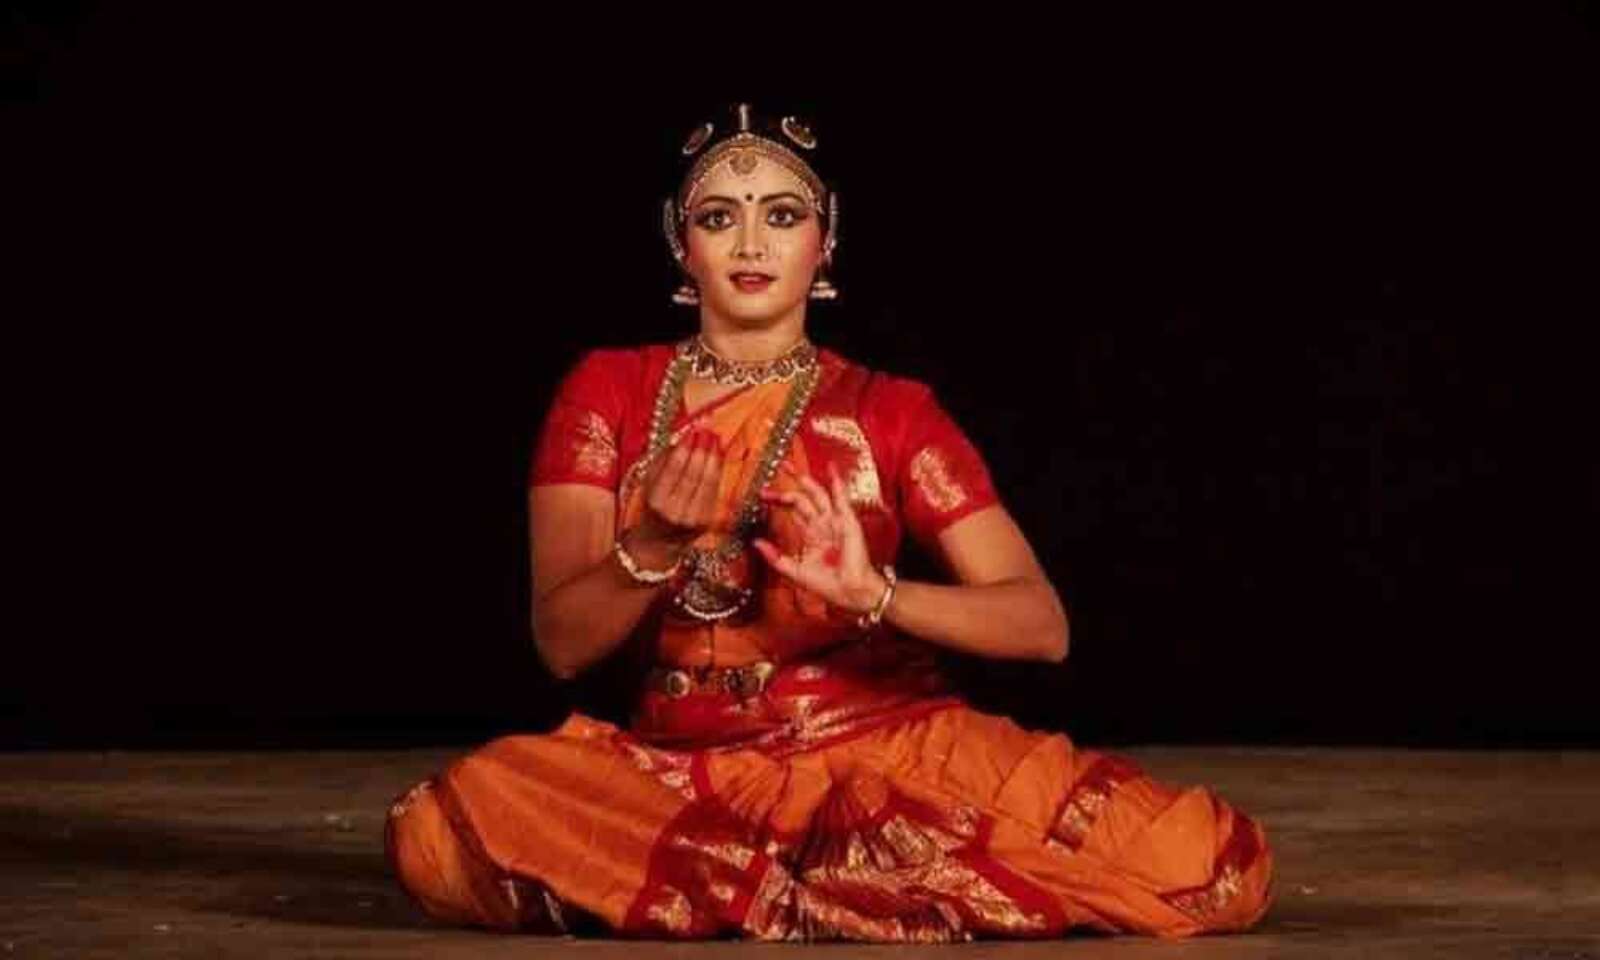 Indian Classical Dance: Is Kathak more beautiful than Bharatanatyam? - Quora